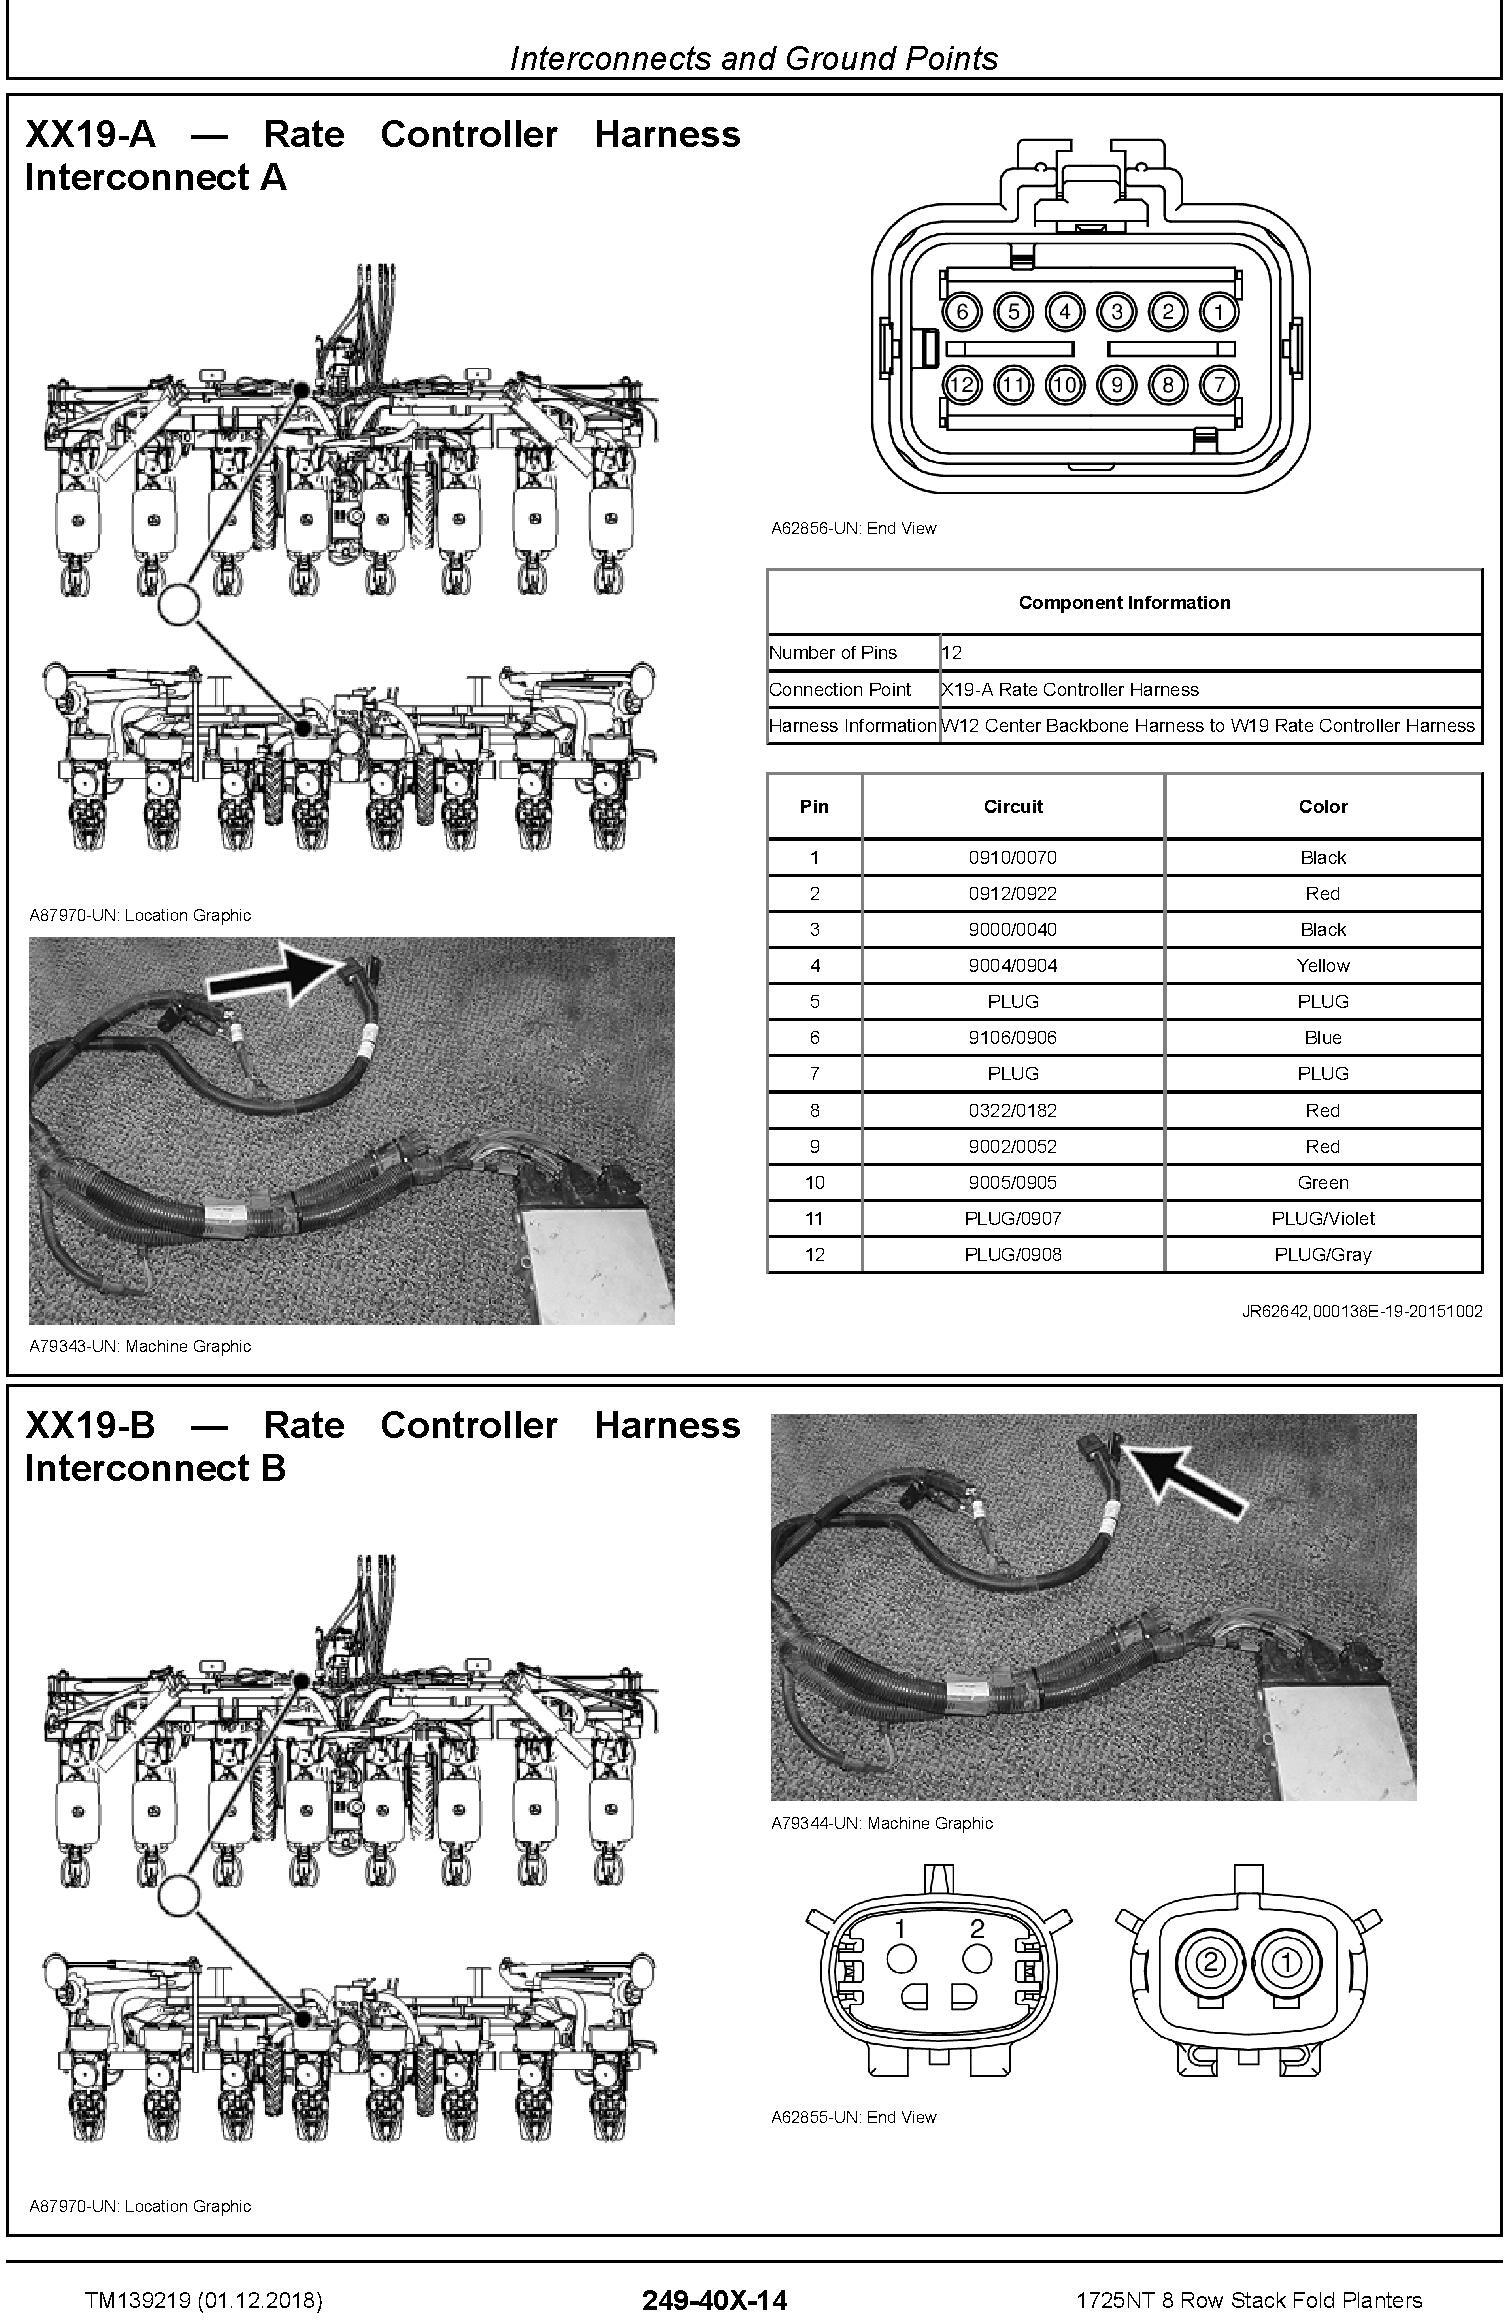 John Deere 1725NT 8 Row Stack Fold Planters Diagnostic Technical Service Manual (TM139219) - 2